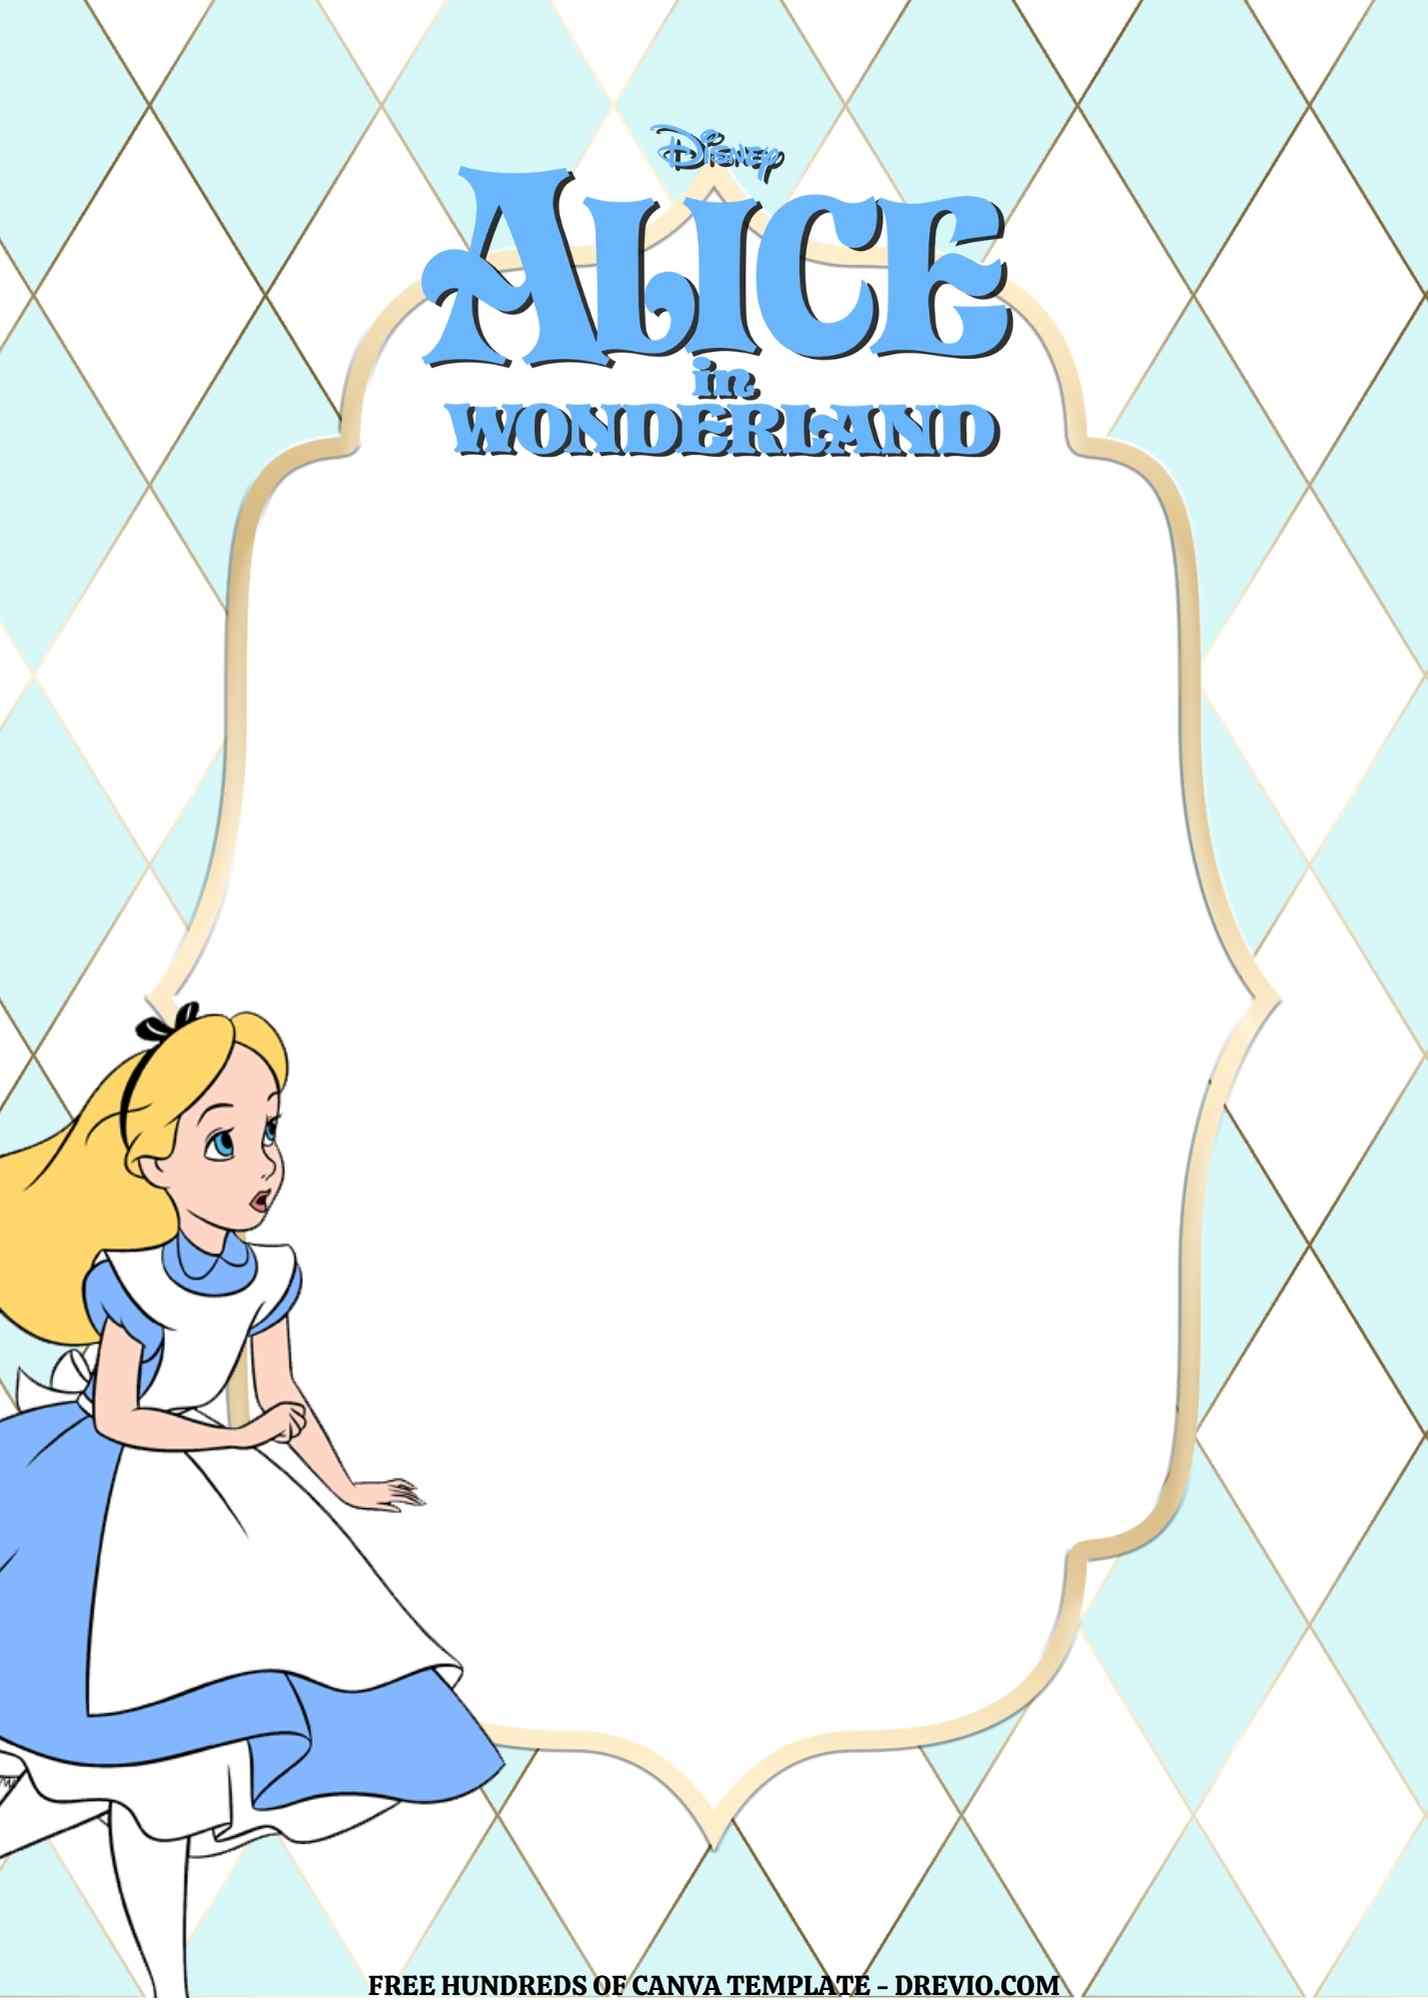 Alice in Wonderland wrapping paper DIY + FREE PRINTABLE